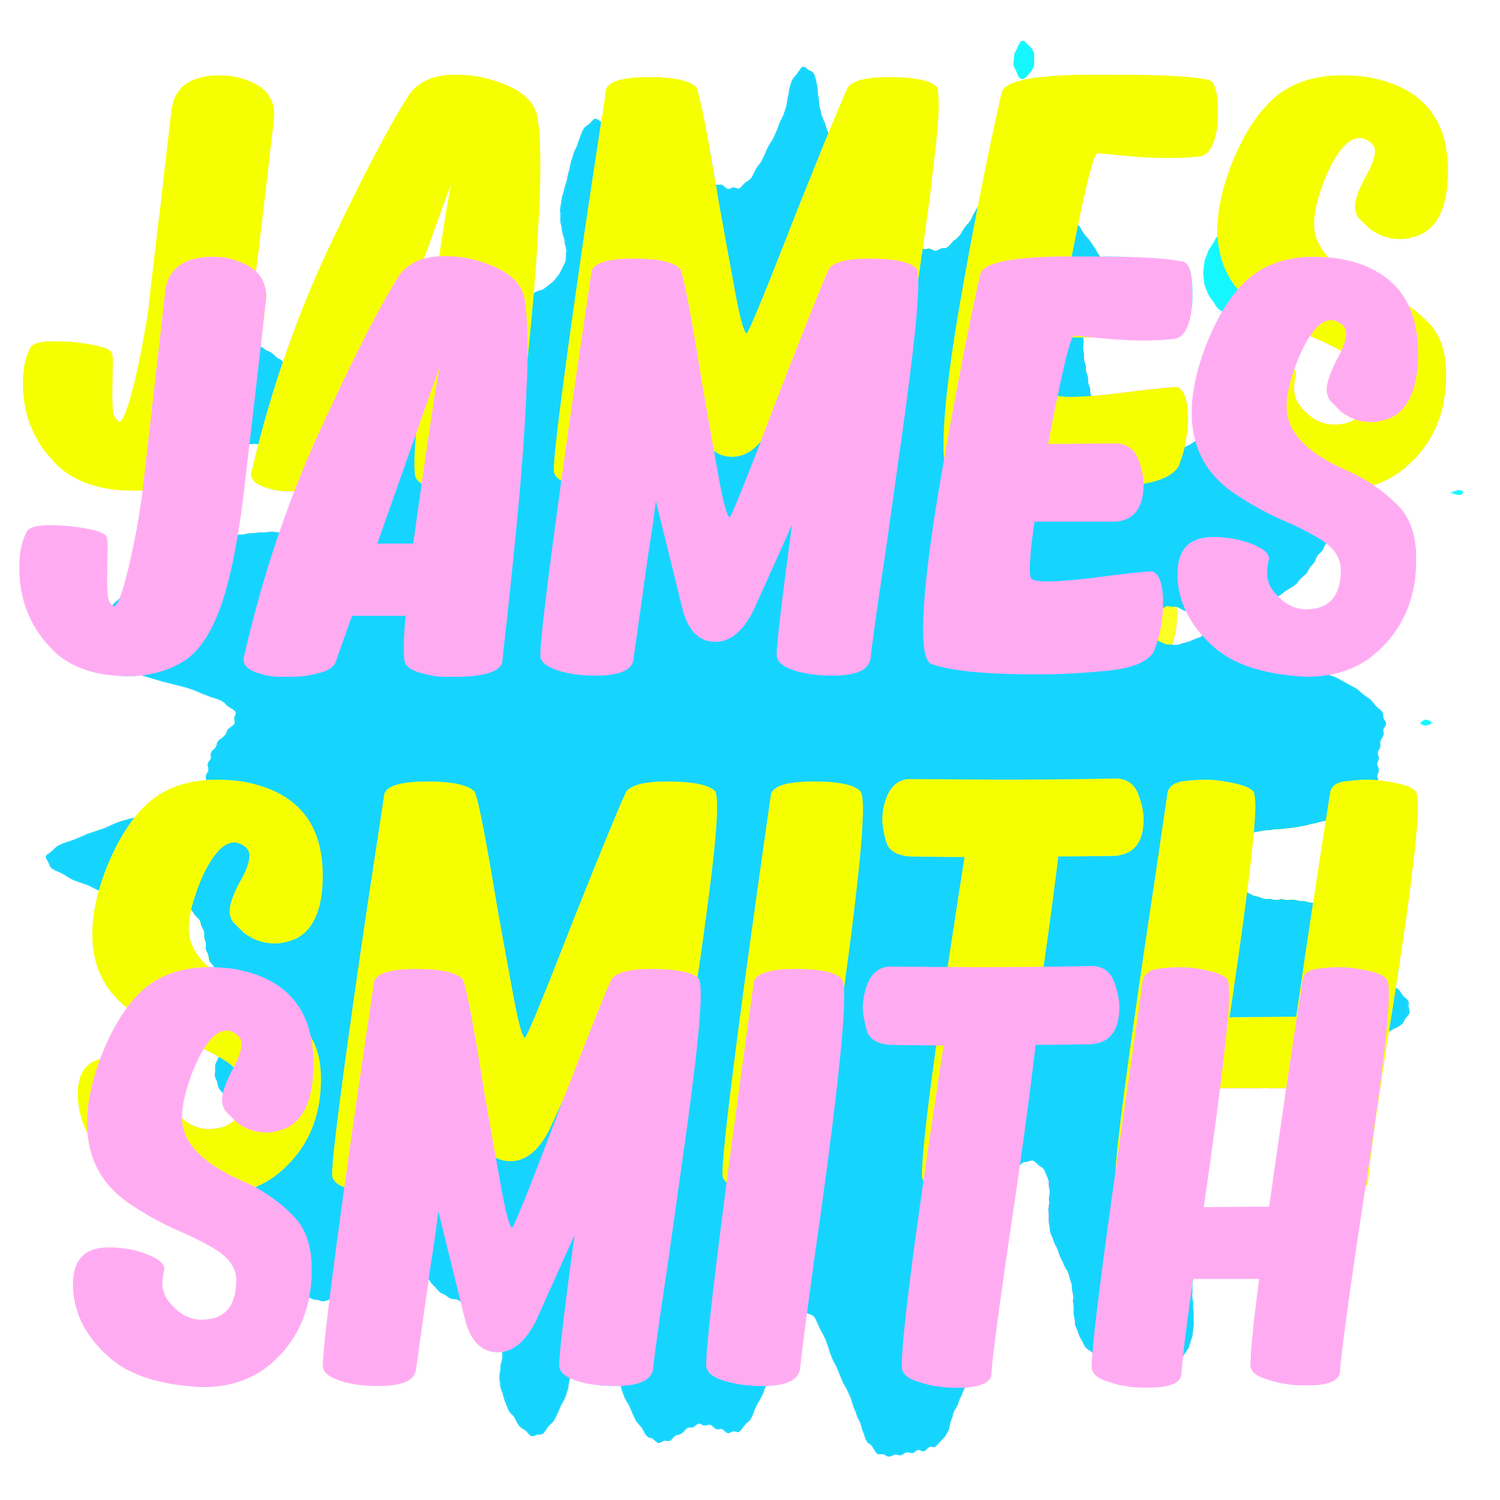 James Smith Art